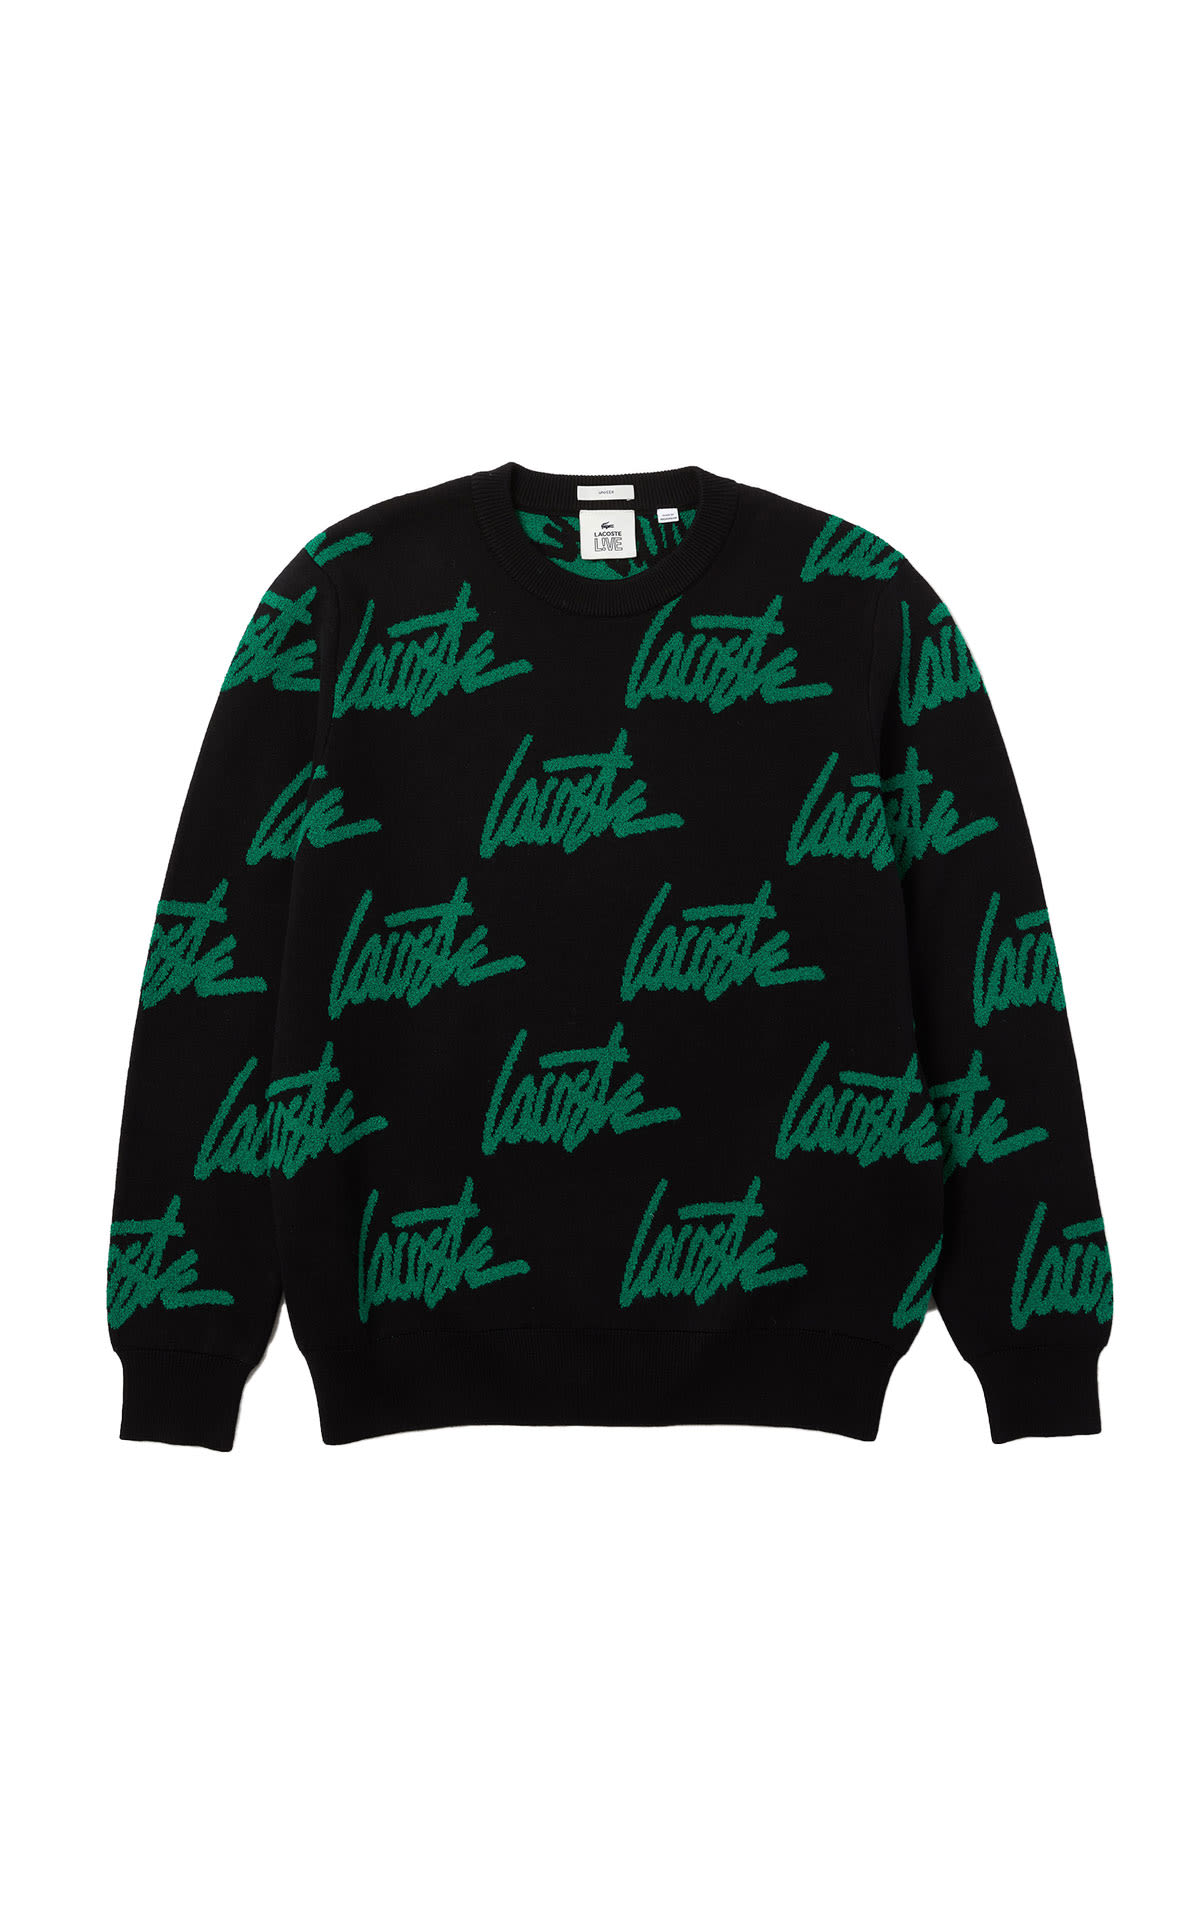 Brand logo sweater Lacoste